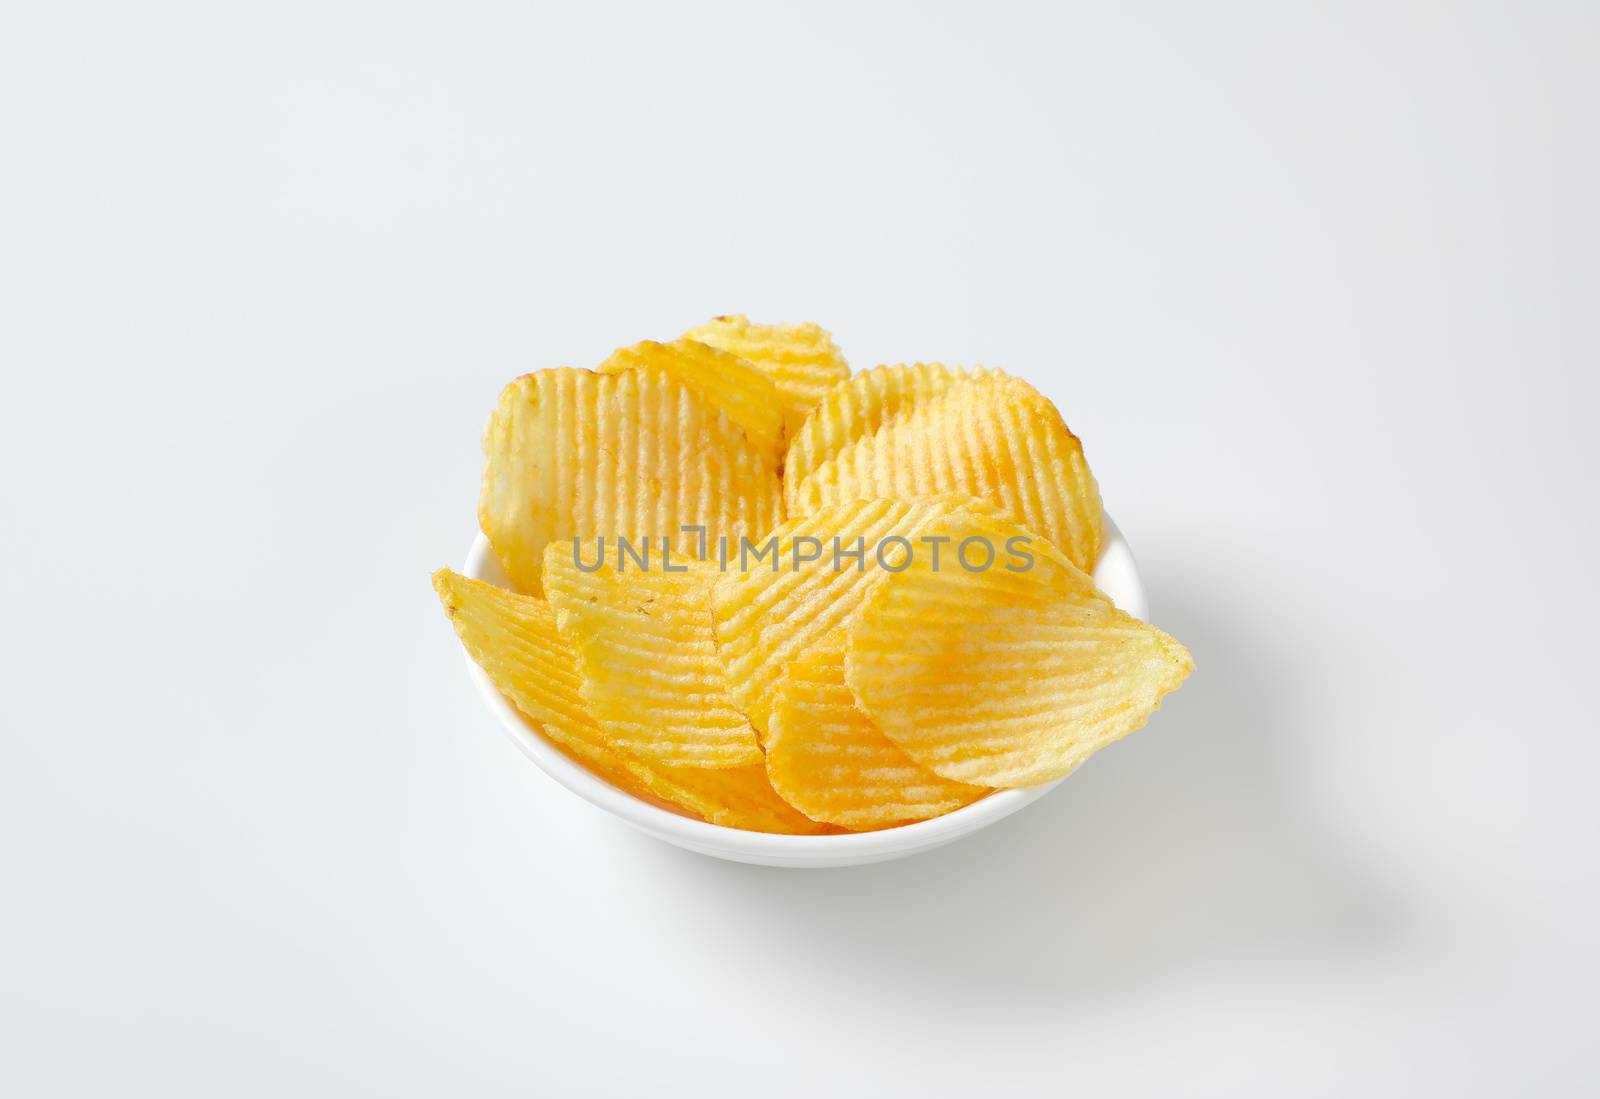 Ridged potato chips by Digifoodstock